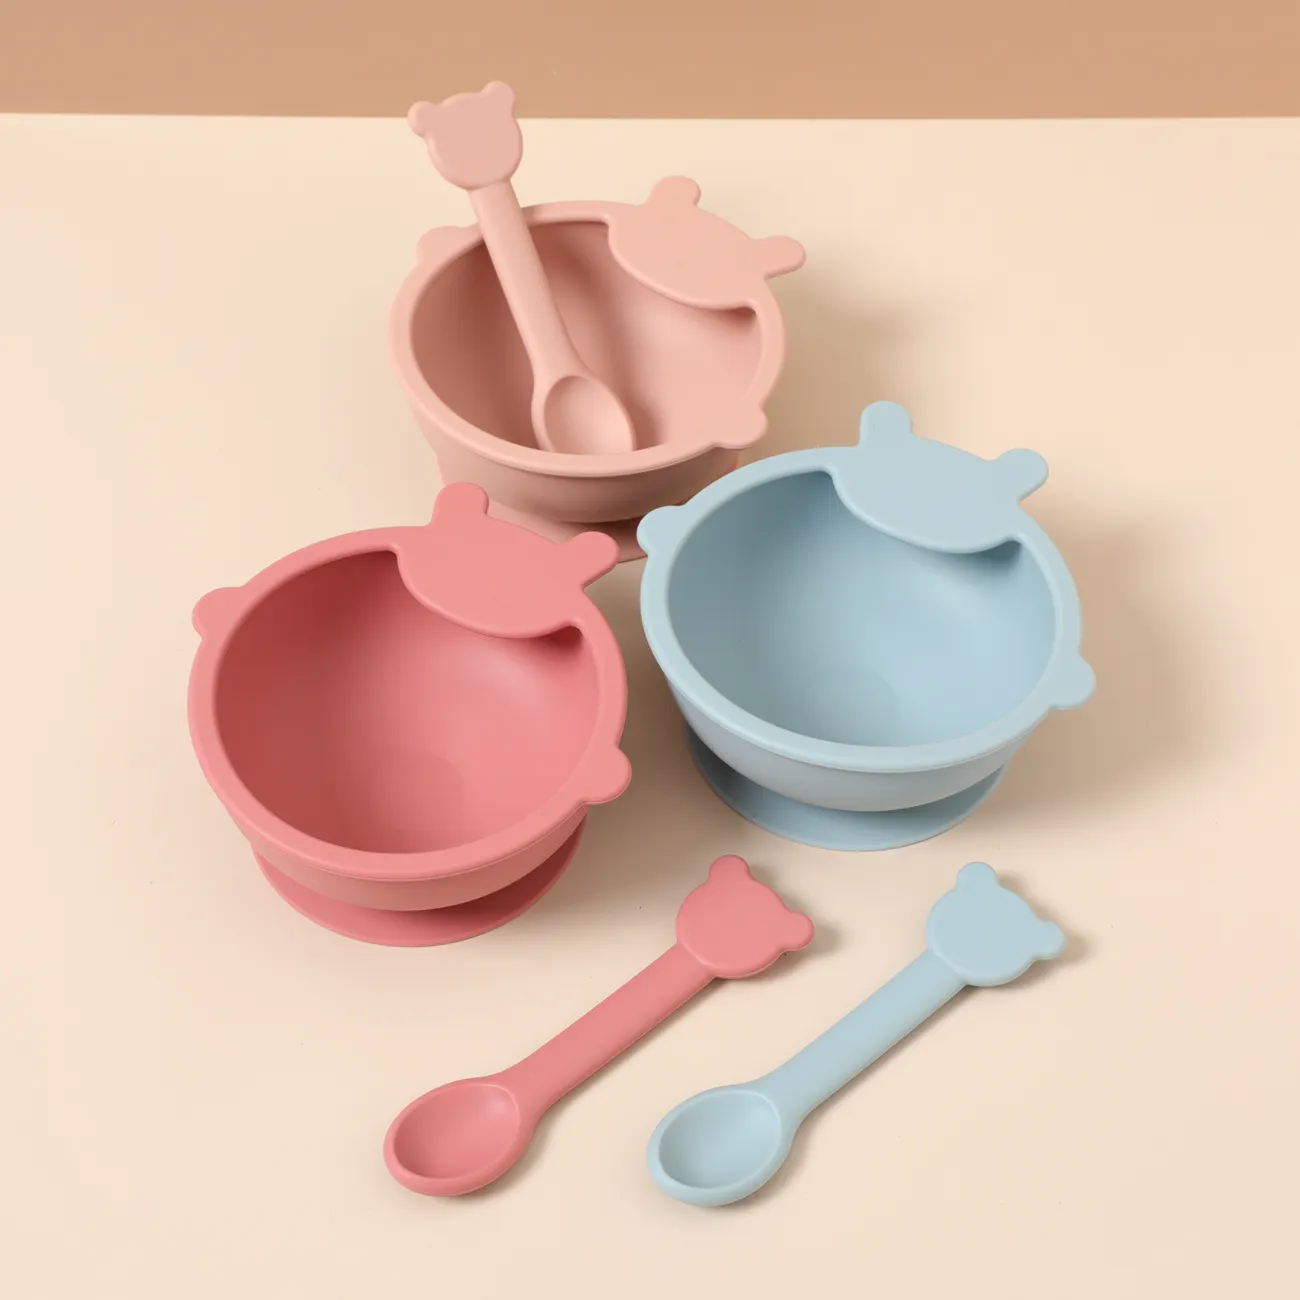 2-pack Cartoon Shape Food Grade Silicone Baby Toddler Self-Feeding Bowl Spoon Utensils Set for Self-Training Light Pink big image 1